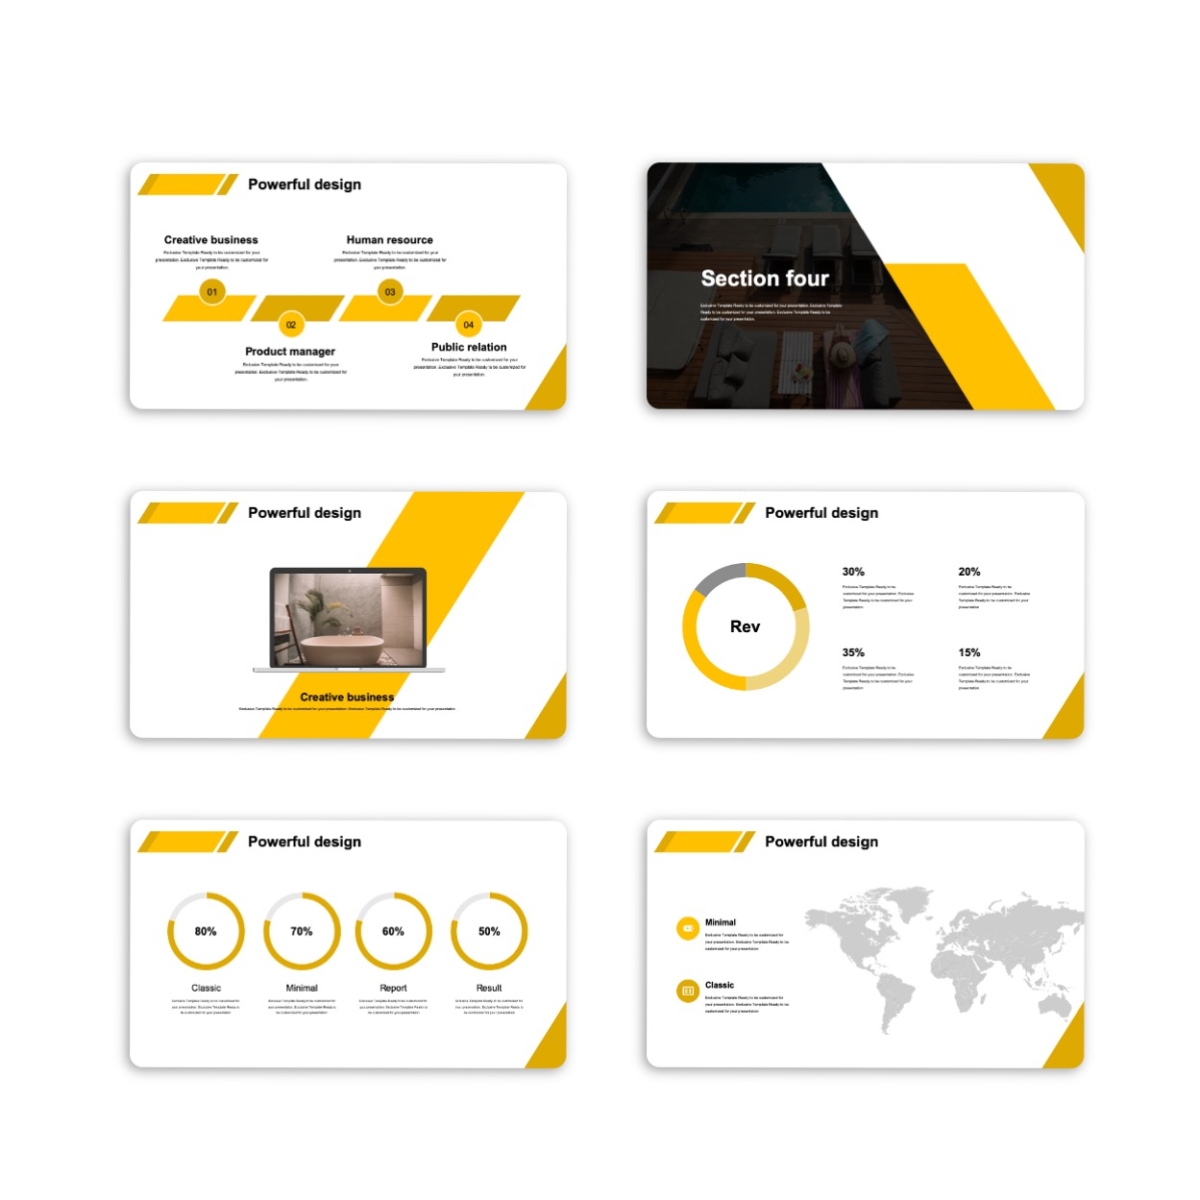 Google Slides-Black Yellow Annual Report Presentation Template